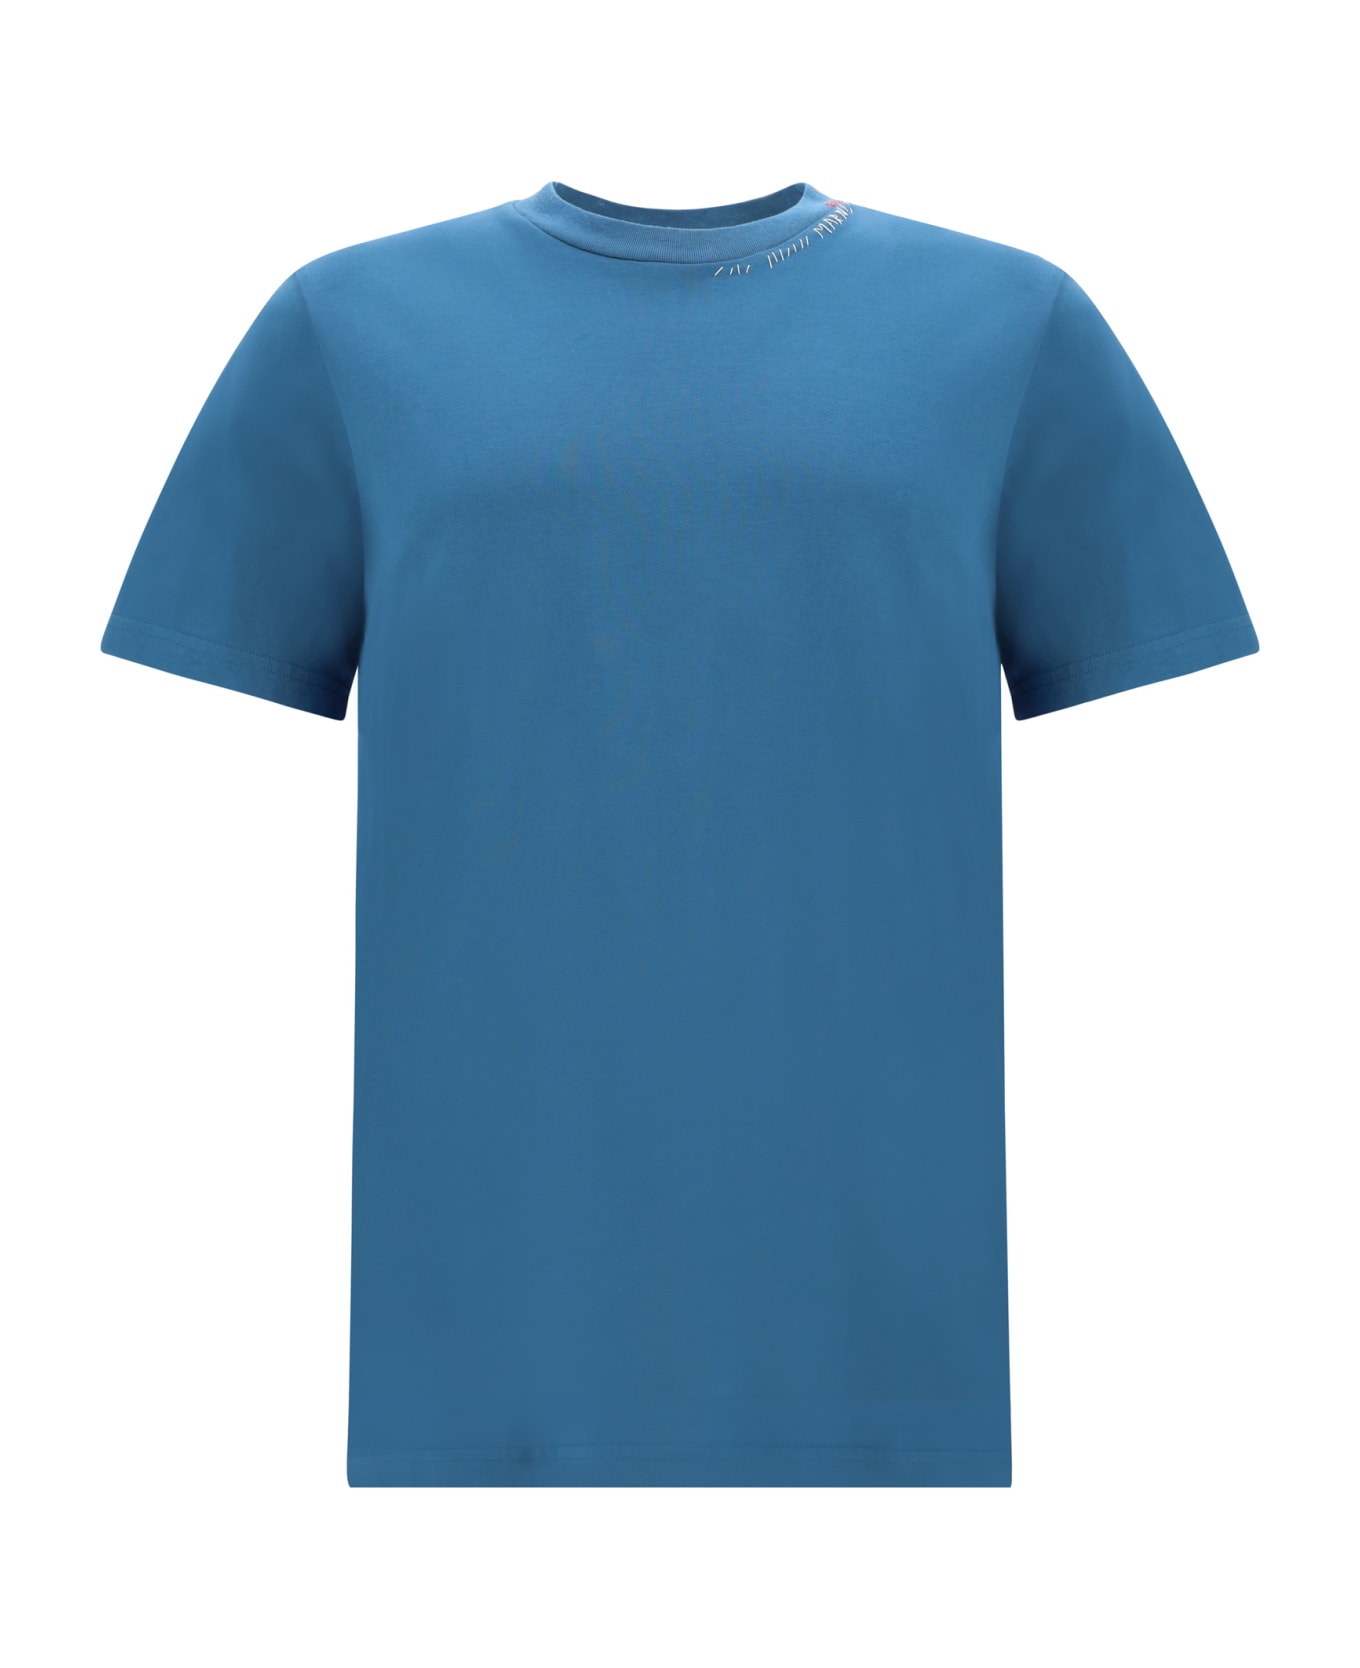 Marni T-shirt - Gnawed Blue